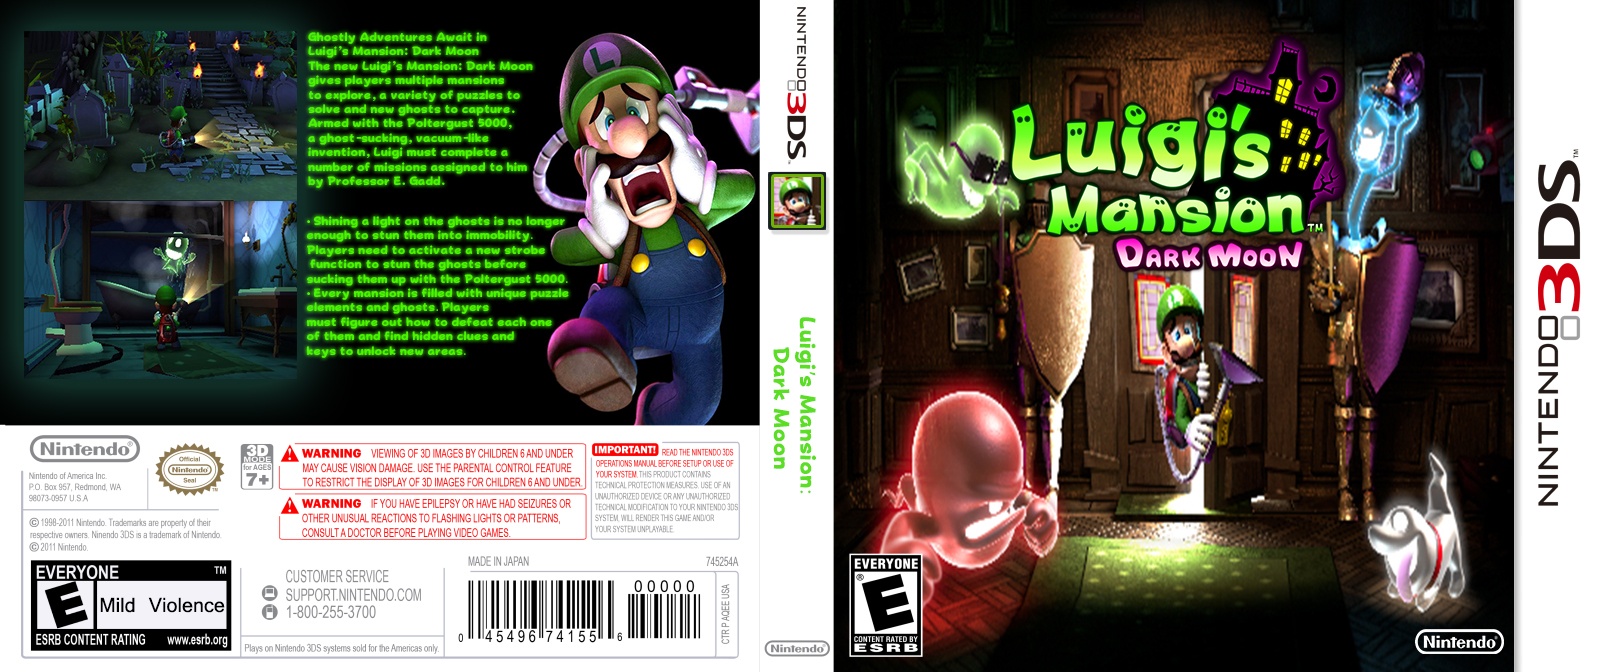 Lugi's Mansion Dark Moon box cover